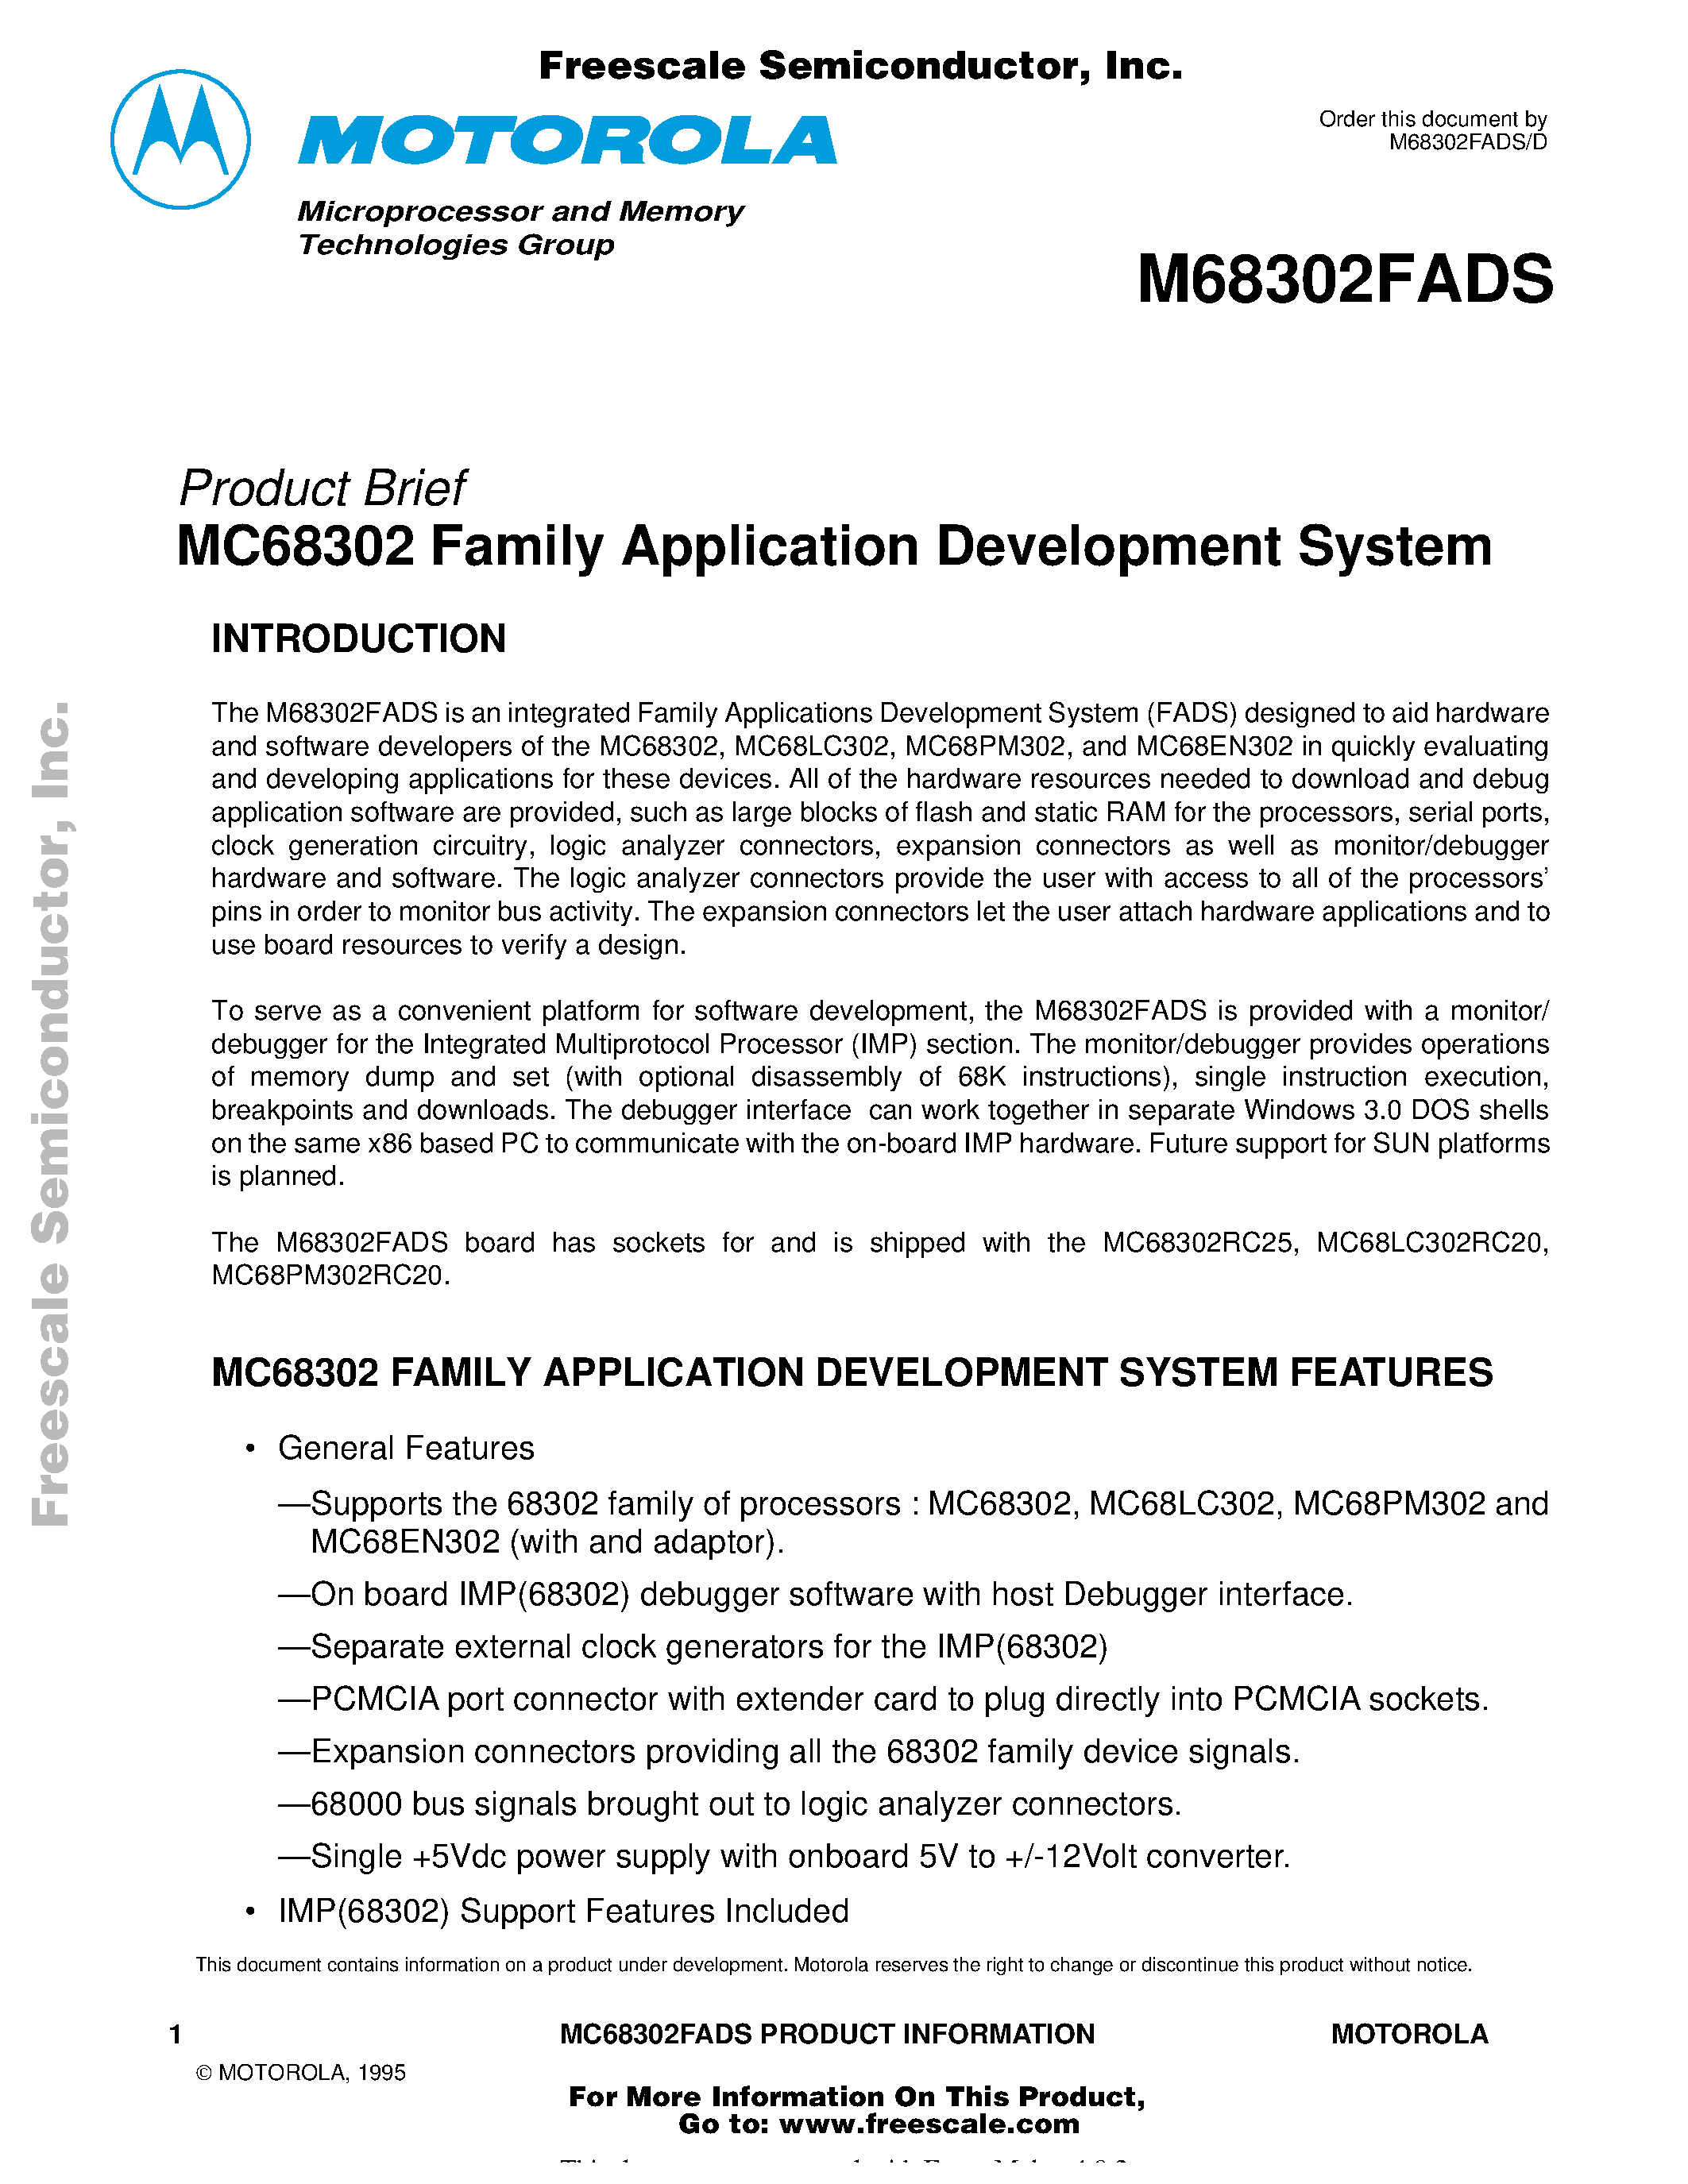 Datasheet M68302FADS - MC68302 Family Application Development System page 1